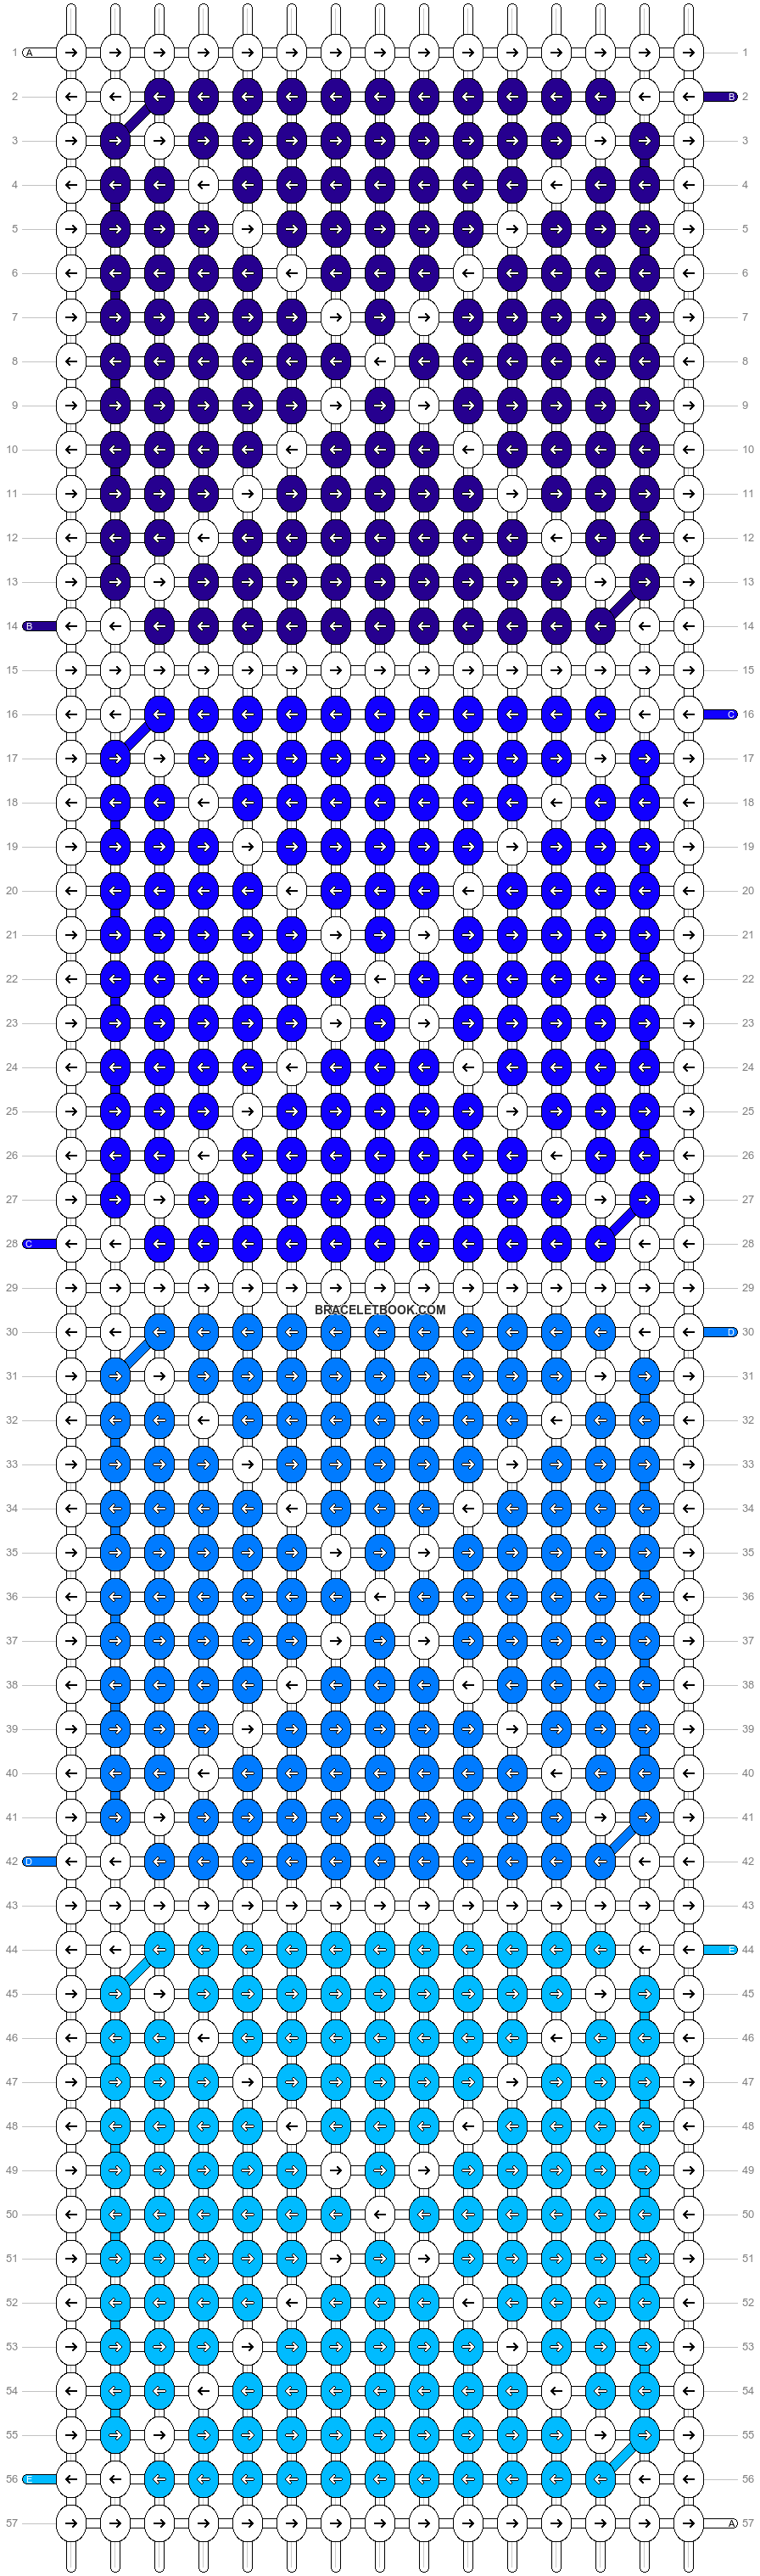 Alpha pattern #53873 pattern